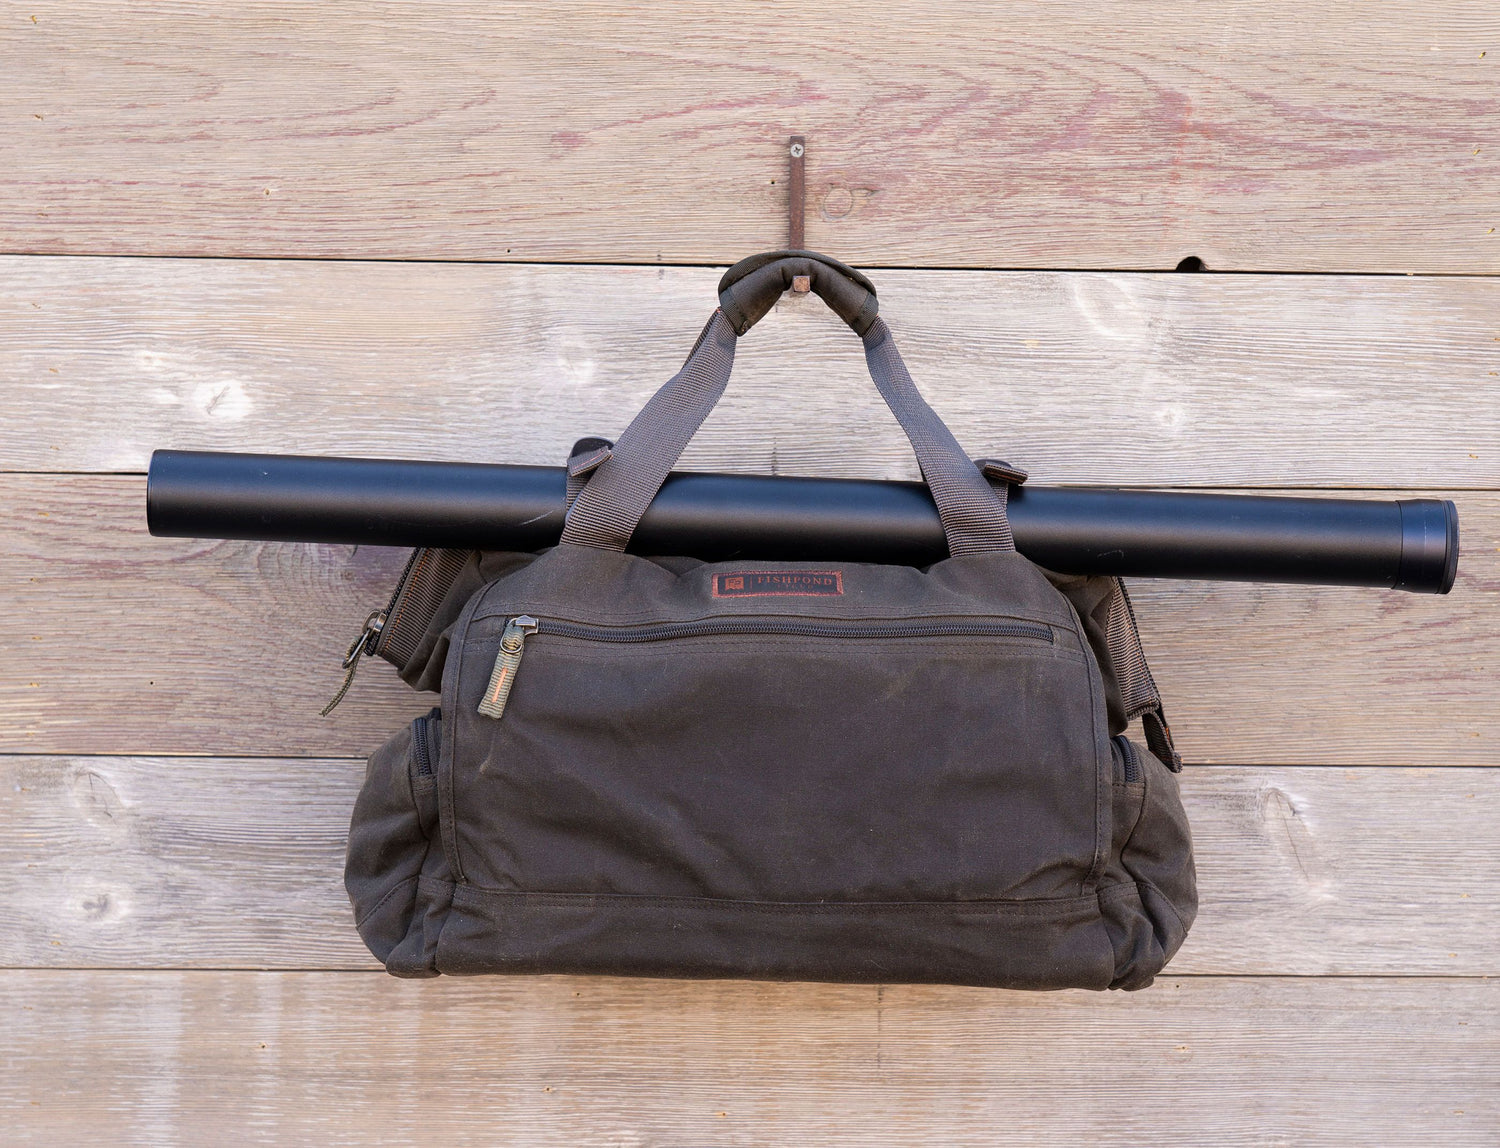 River Lake Purse Strap,Wide Shoulder Strap Adjustable Replacement Crossbody Bag Straps for Handbag,Crossbody Bags,Shoulder Bags